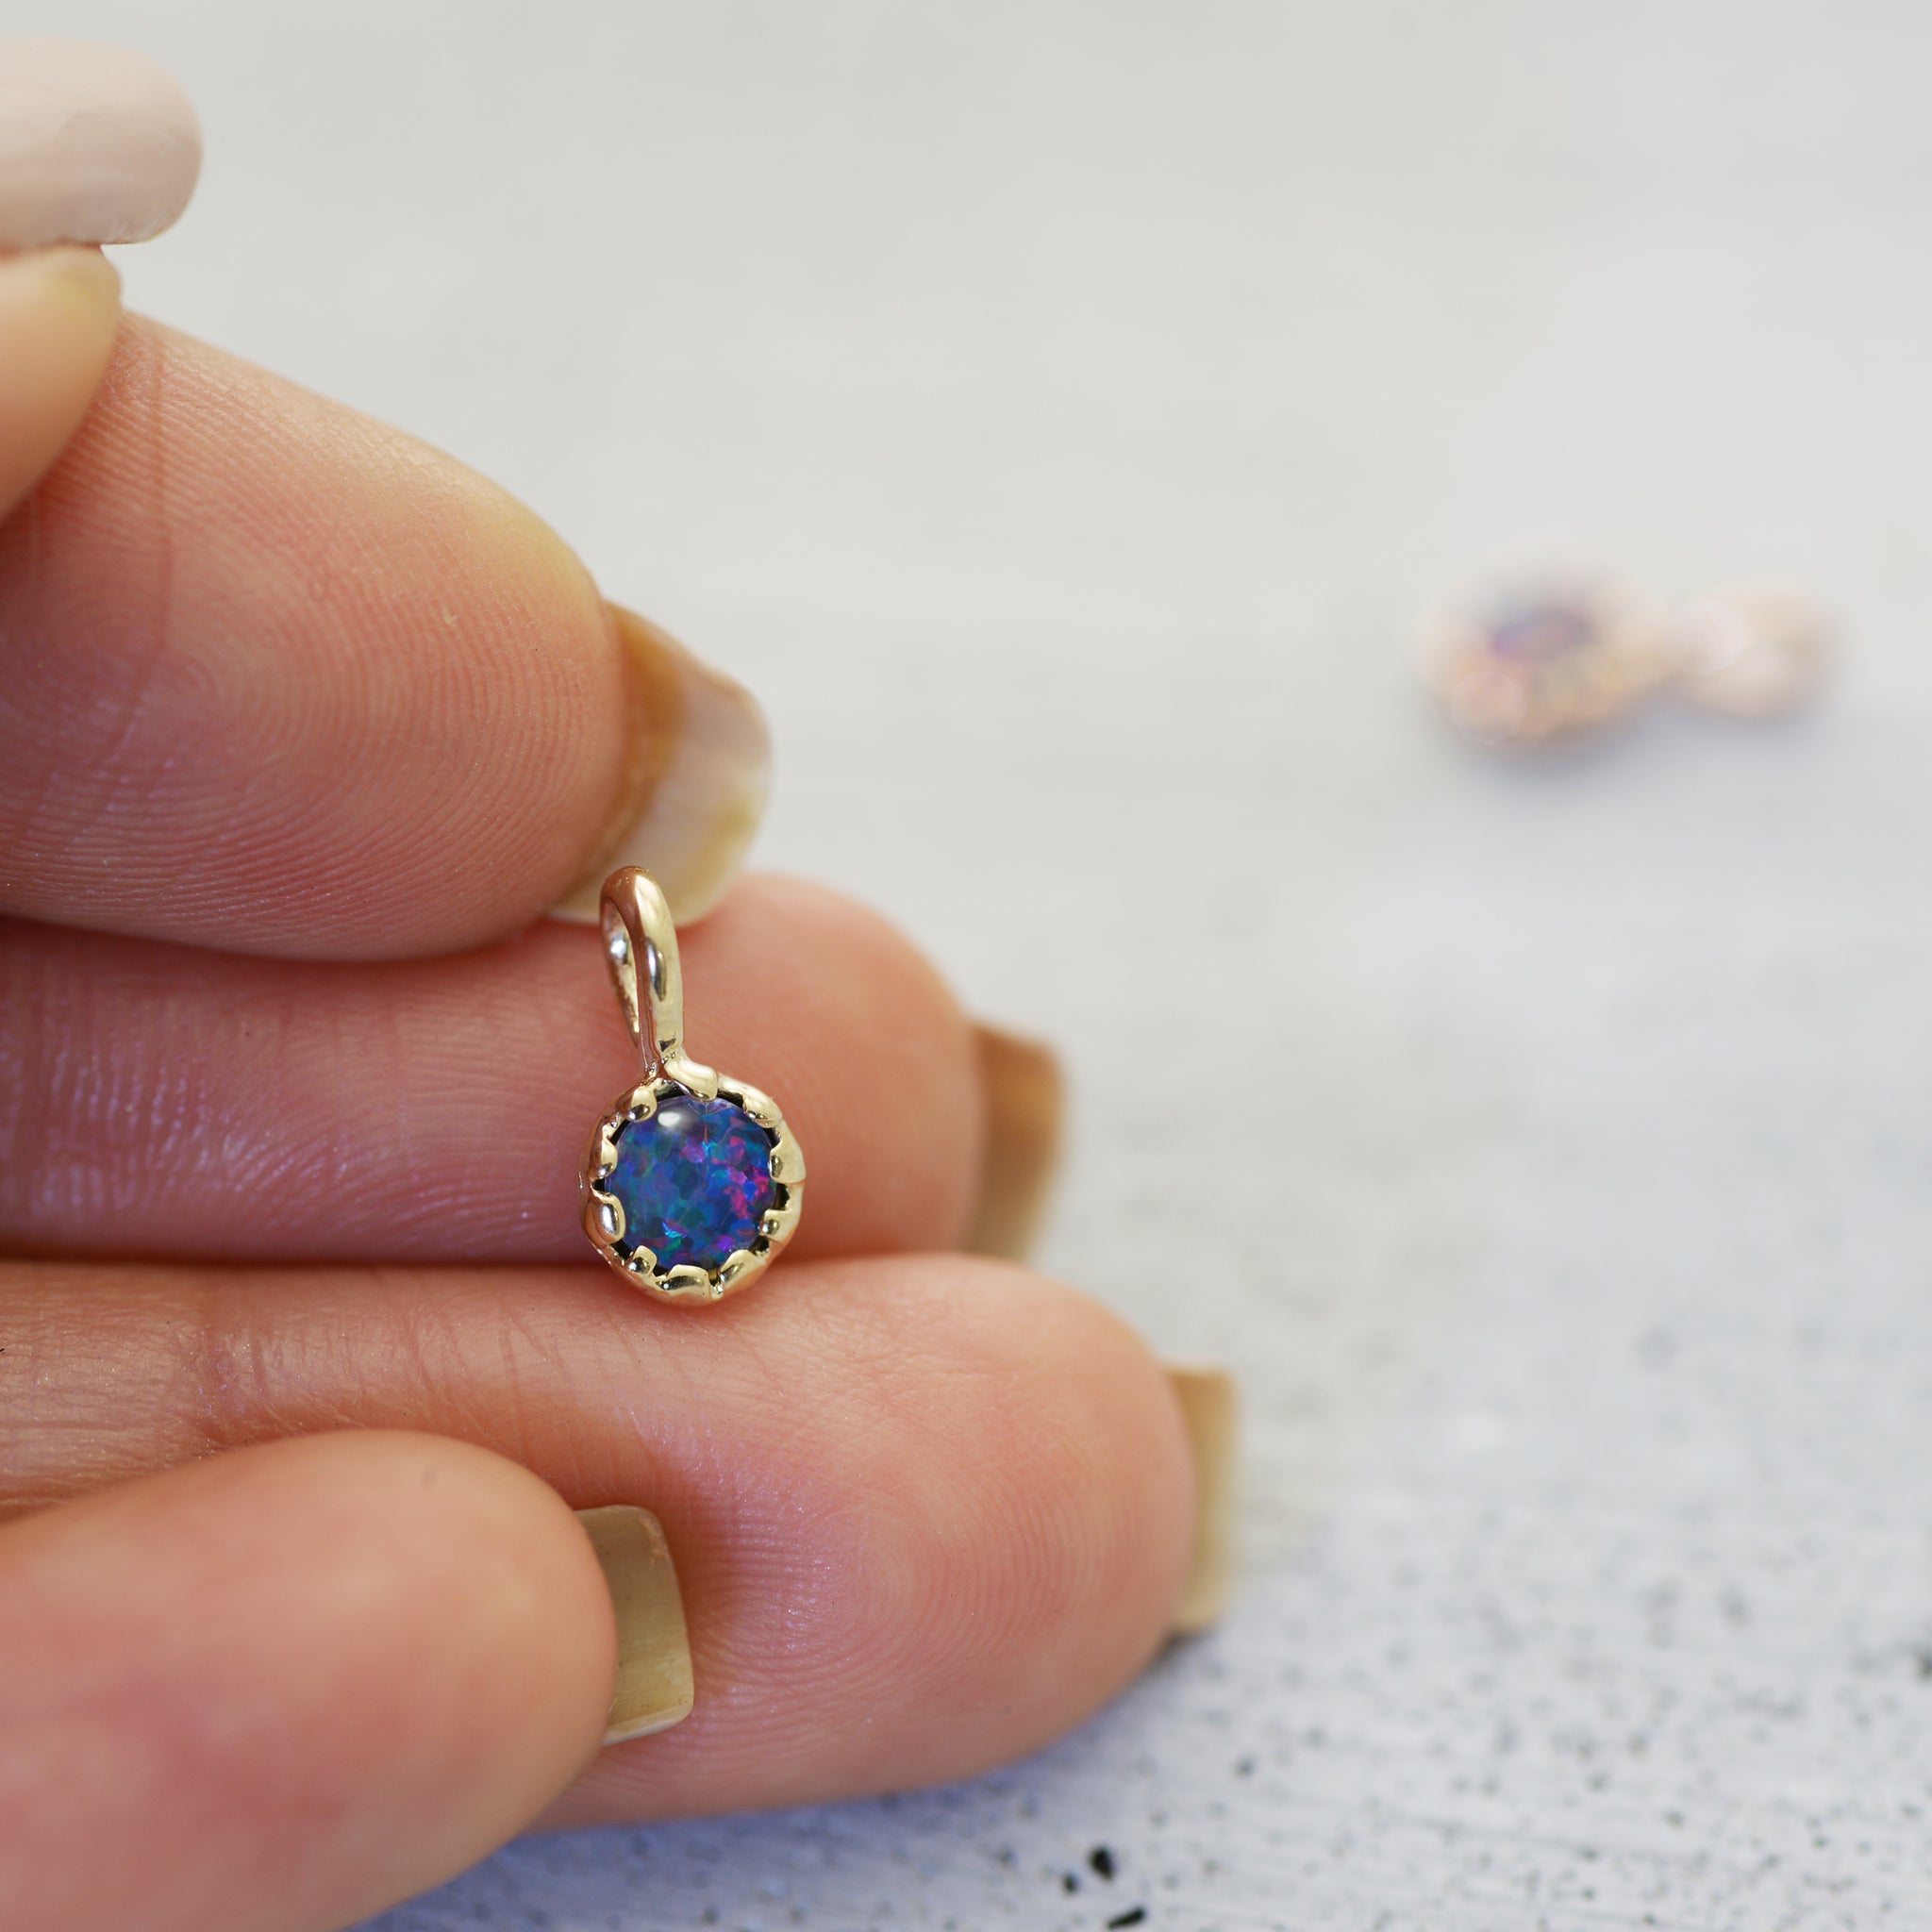 Opal mud Necklace (5mm round/ doublet opal) - 14K/18K Gold